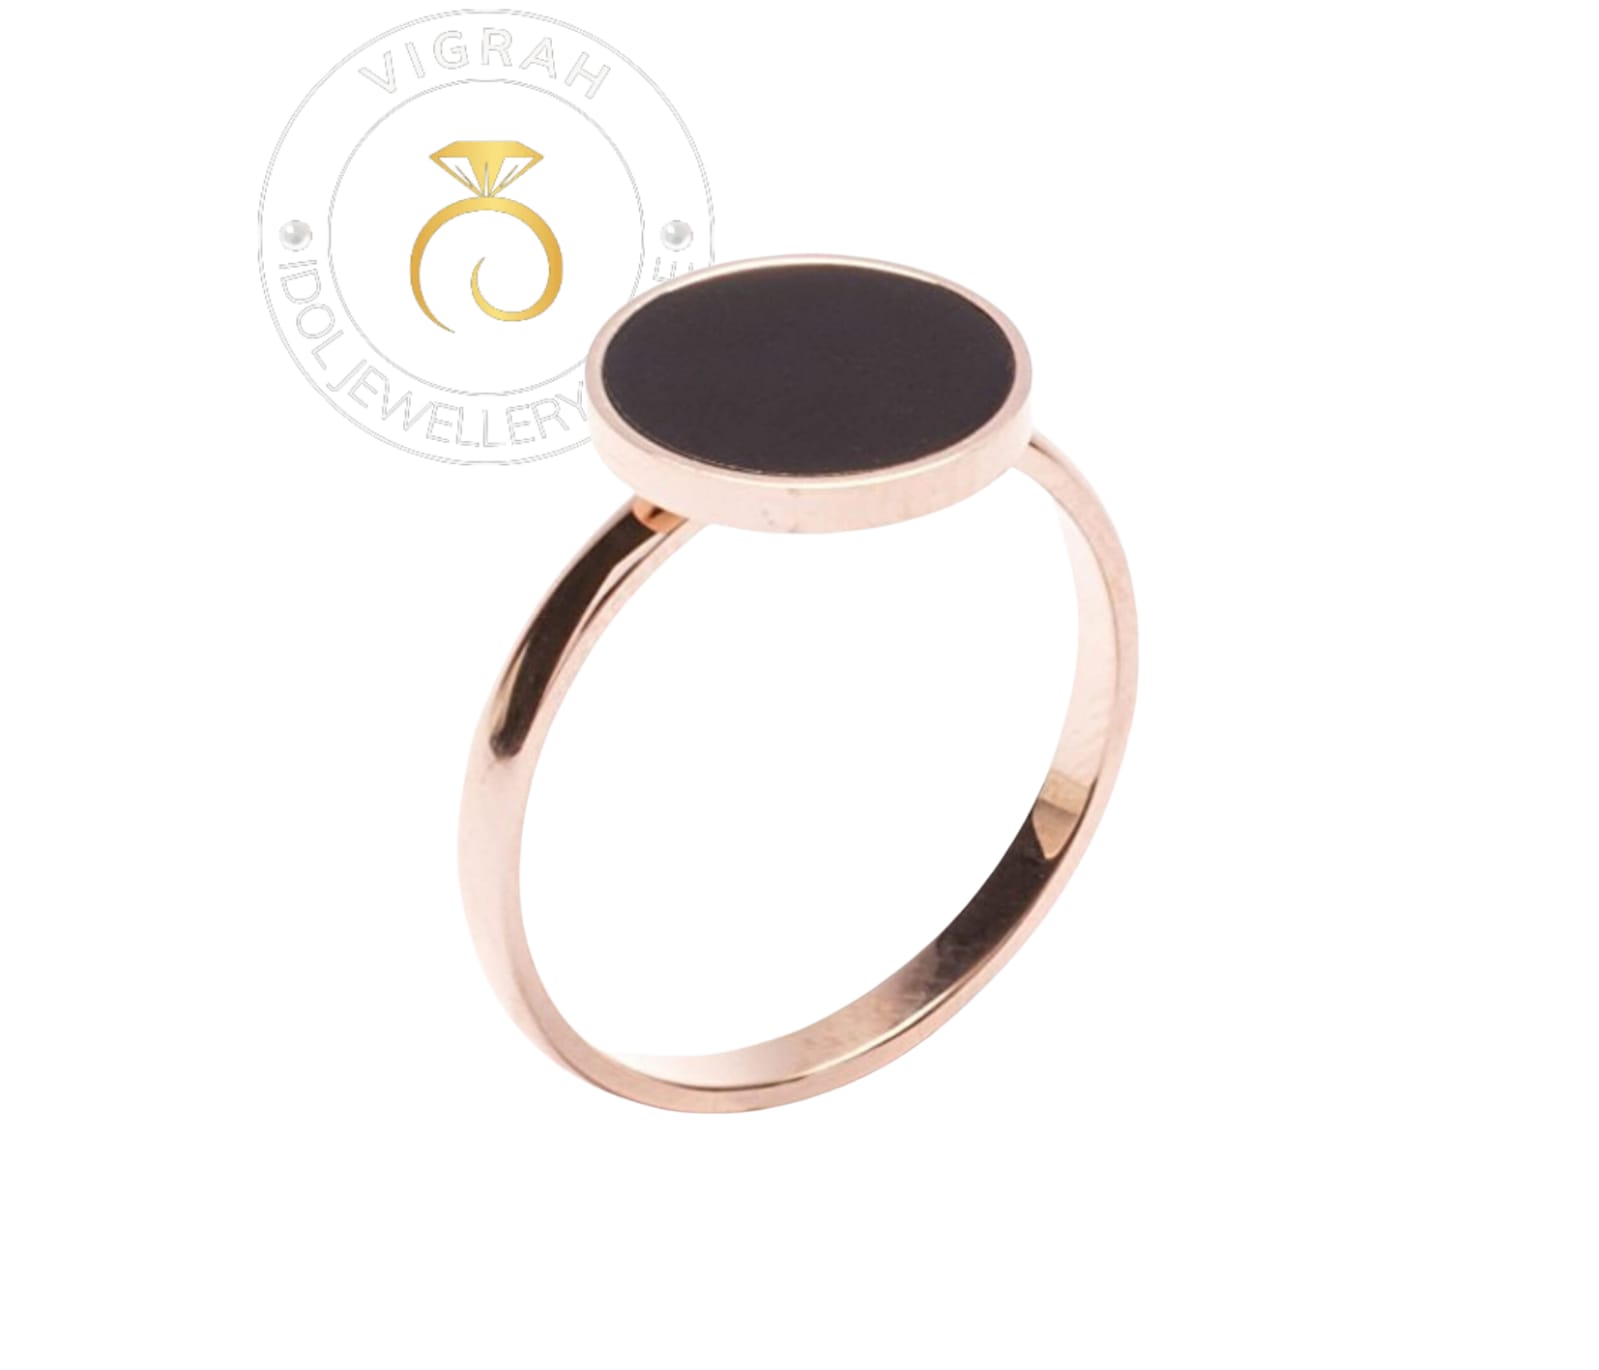 Black Obsidian Engagement Ring in 14kt Gold | La Kaiser